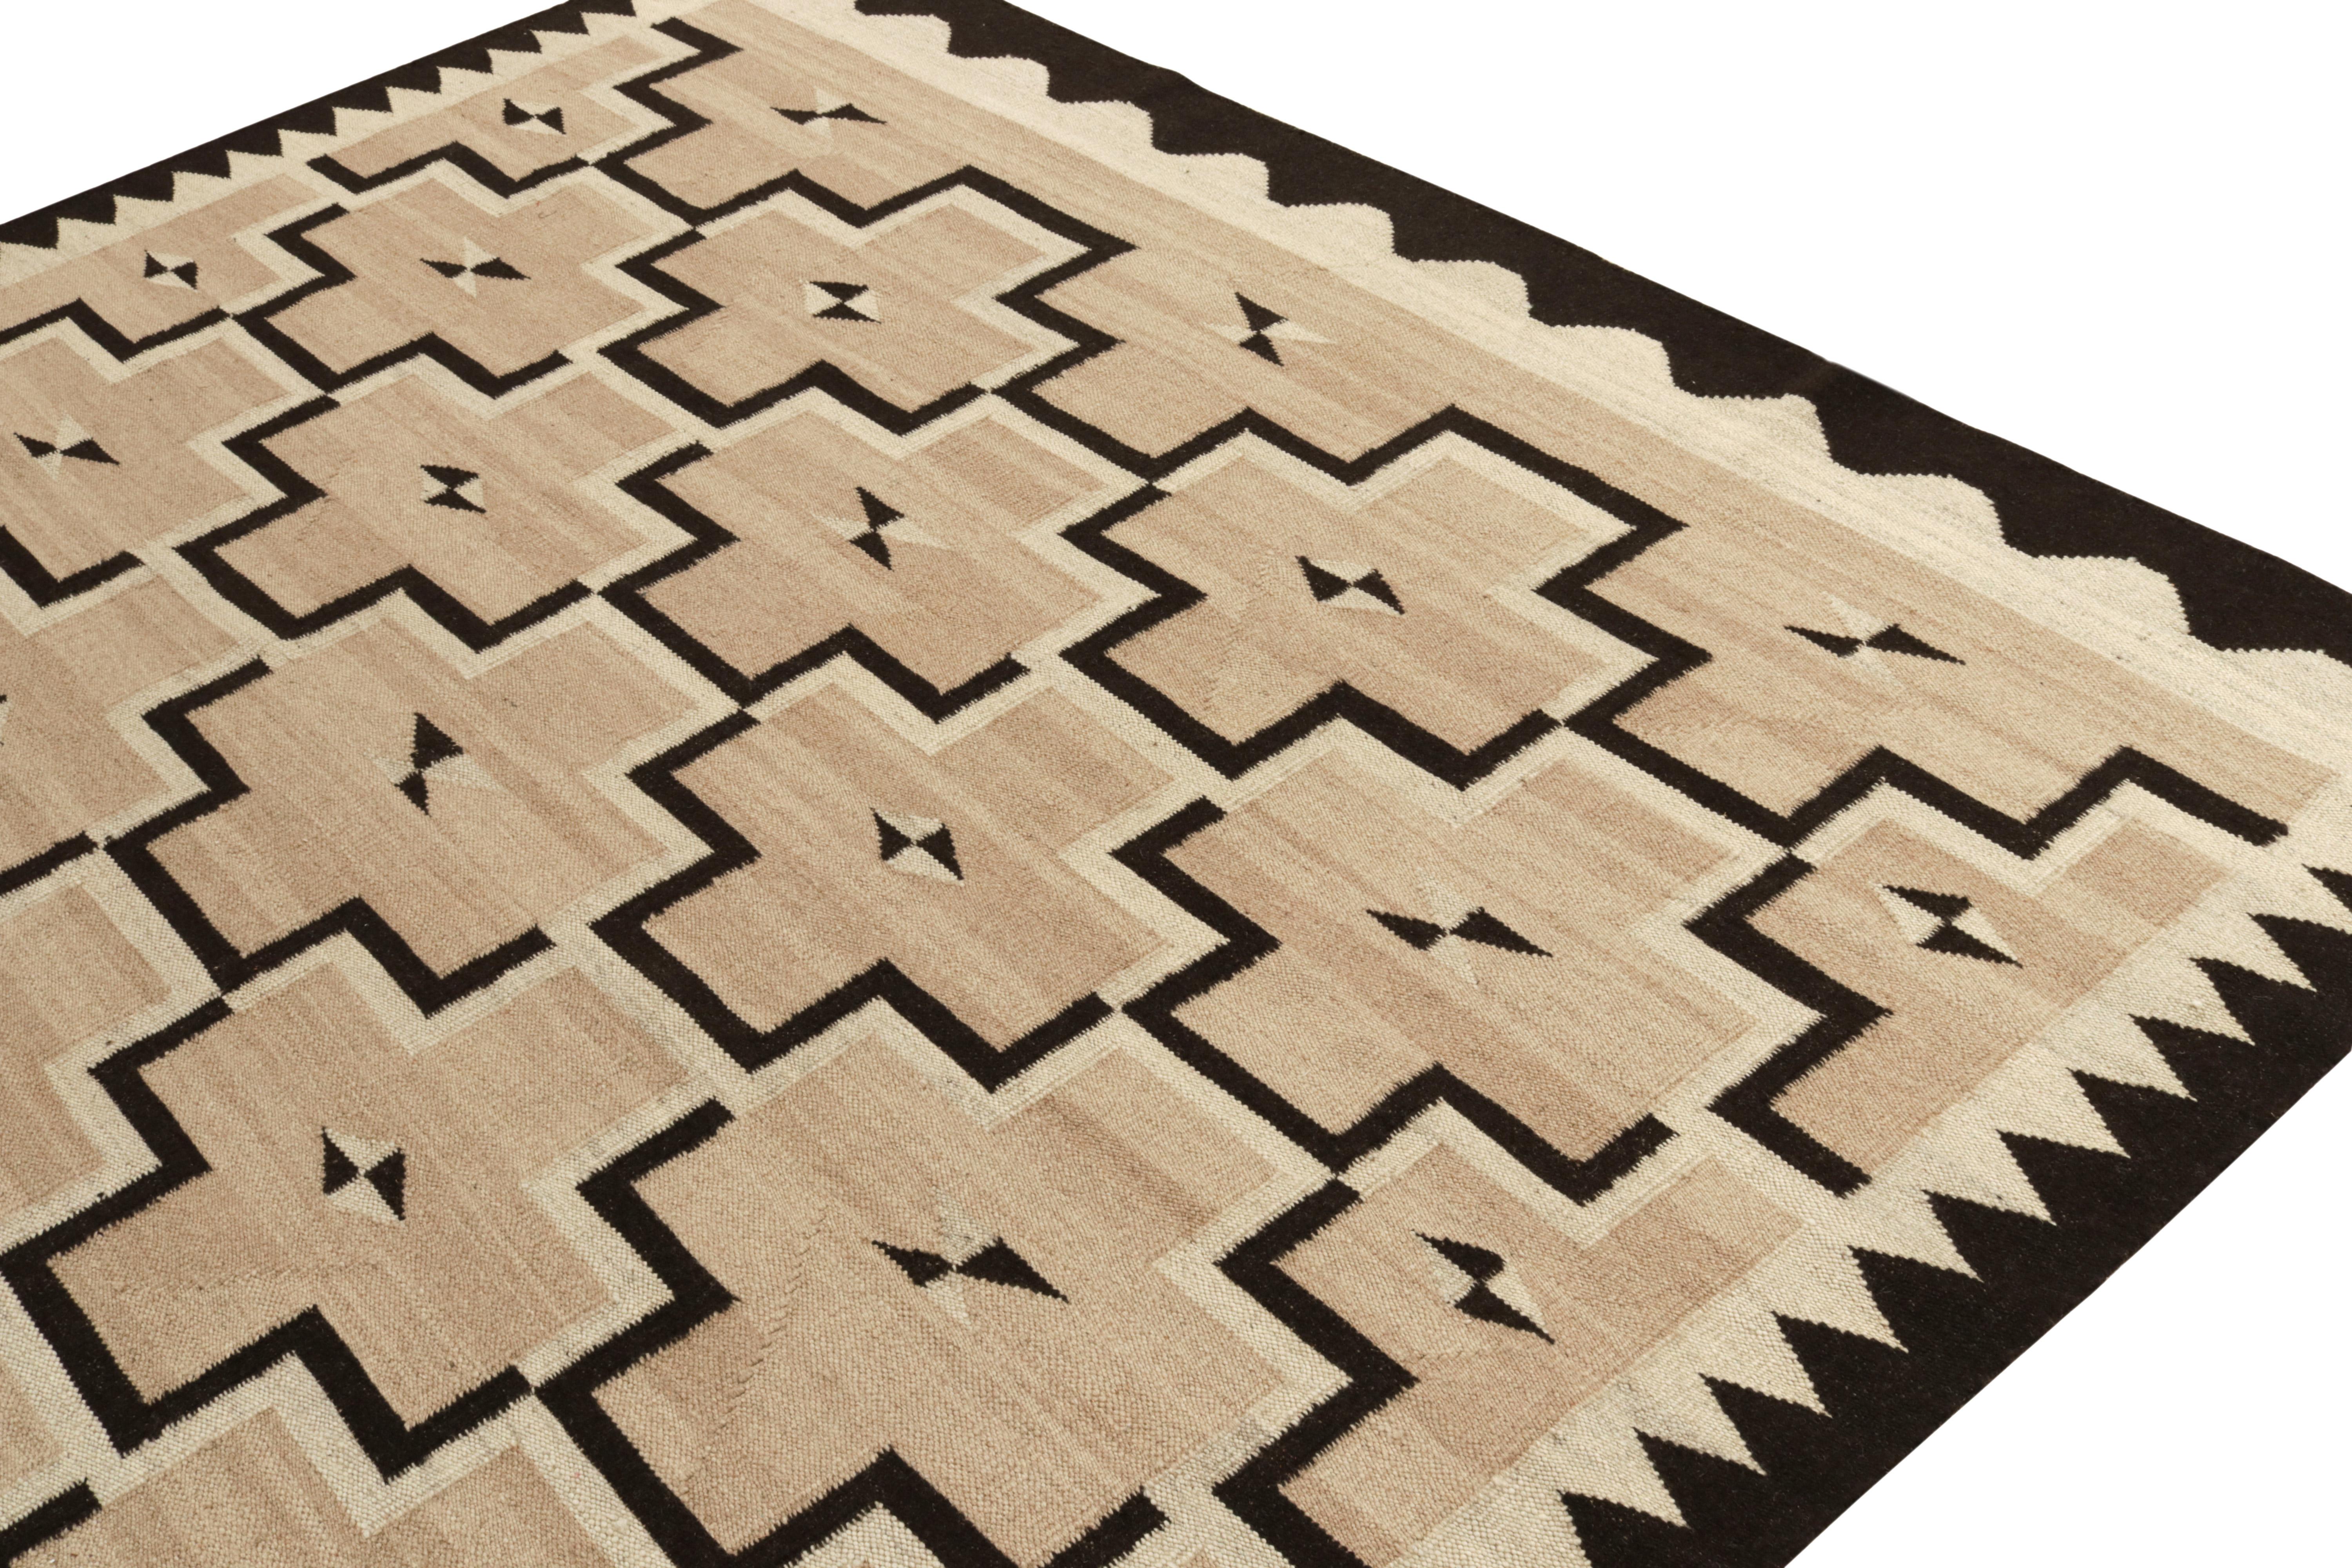 Hand-Knotted Rug & Kilim's Navajo Kilim Style Rug in Beige, Black & White Geometric Pattern